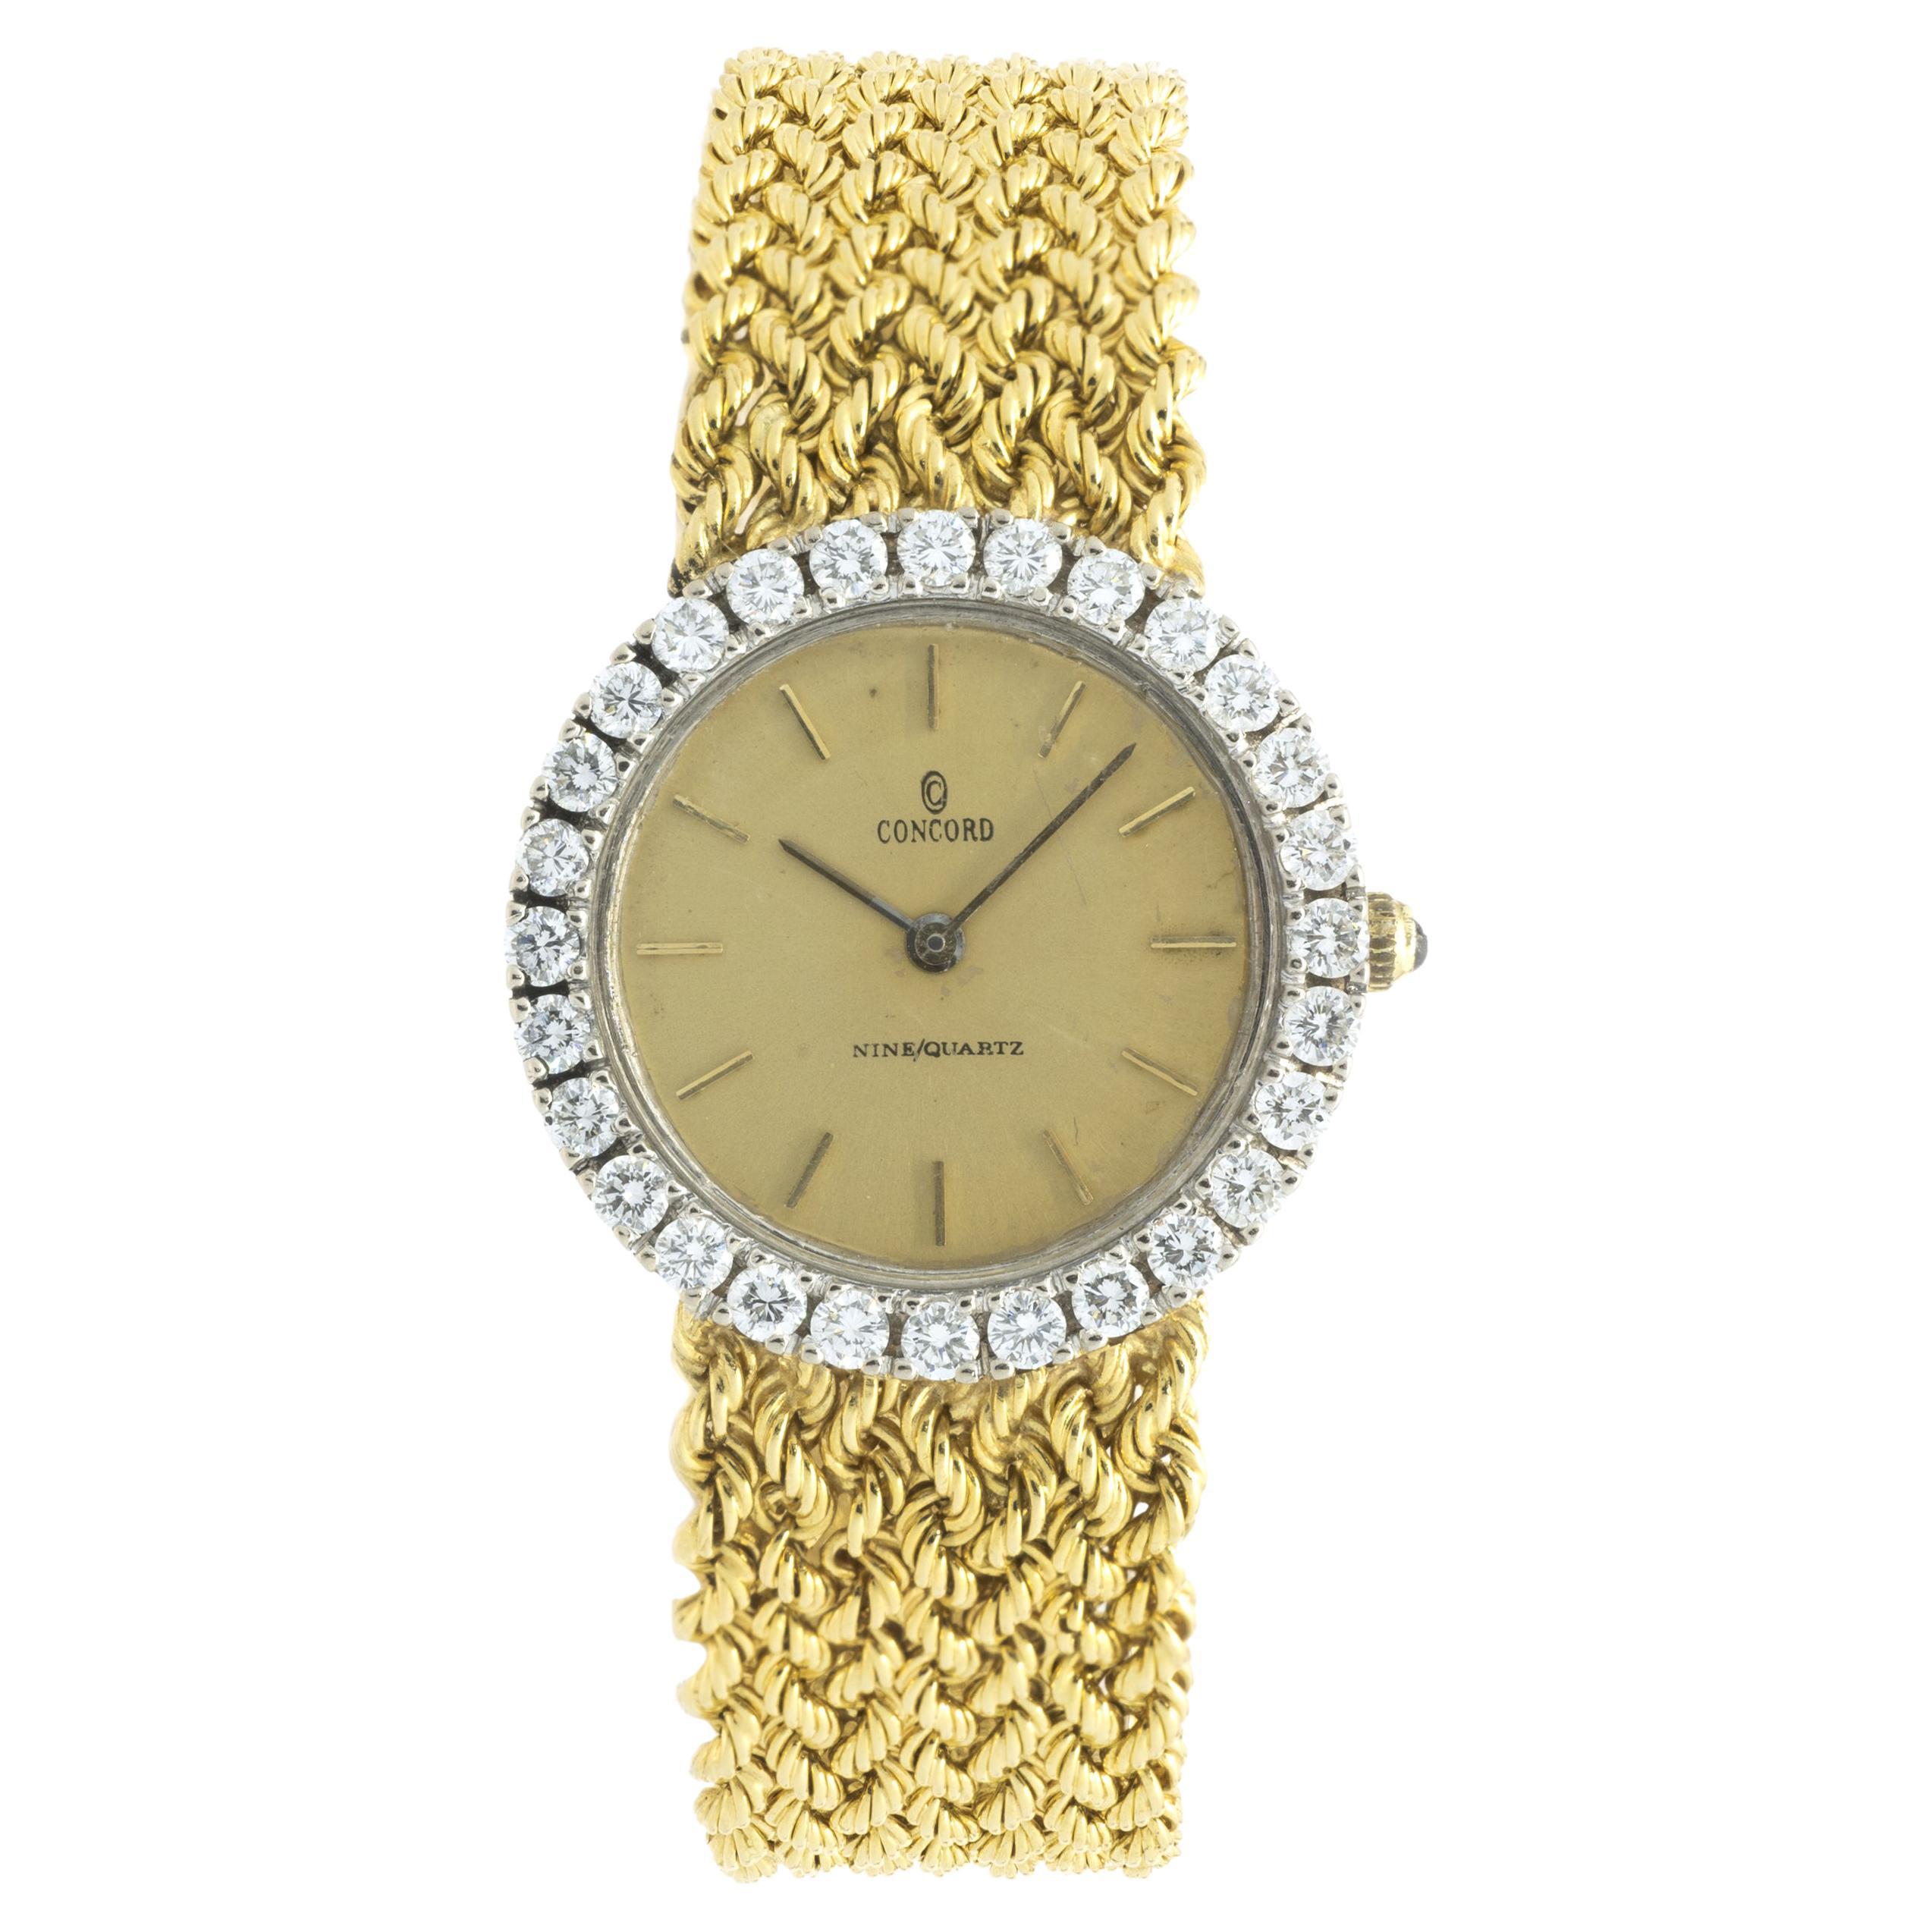 Concord 18 Karat Yellow Gold Vintage Ladies Diamond Nine Quartz Watch